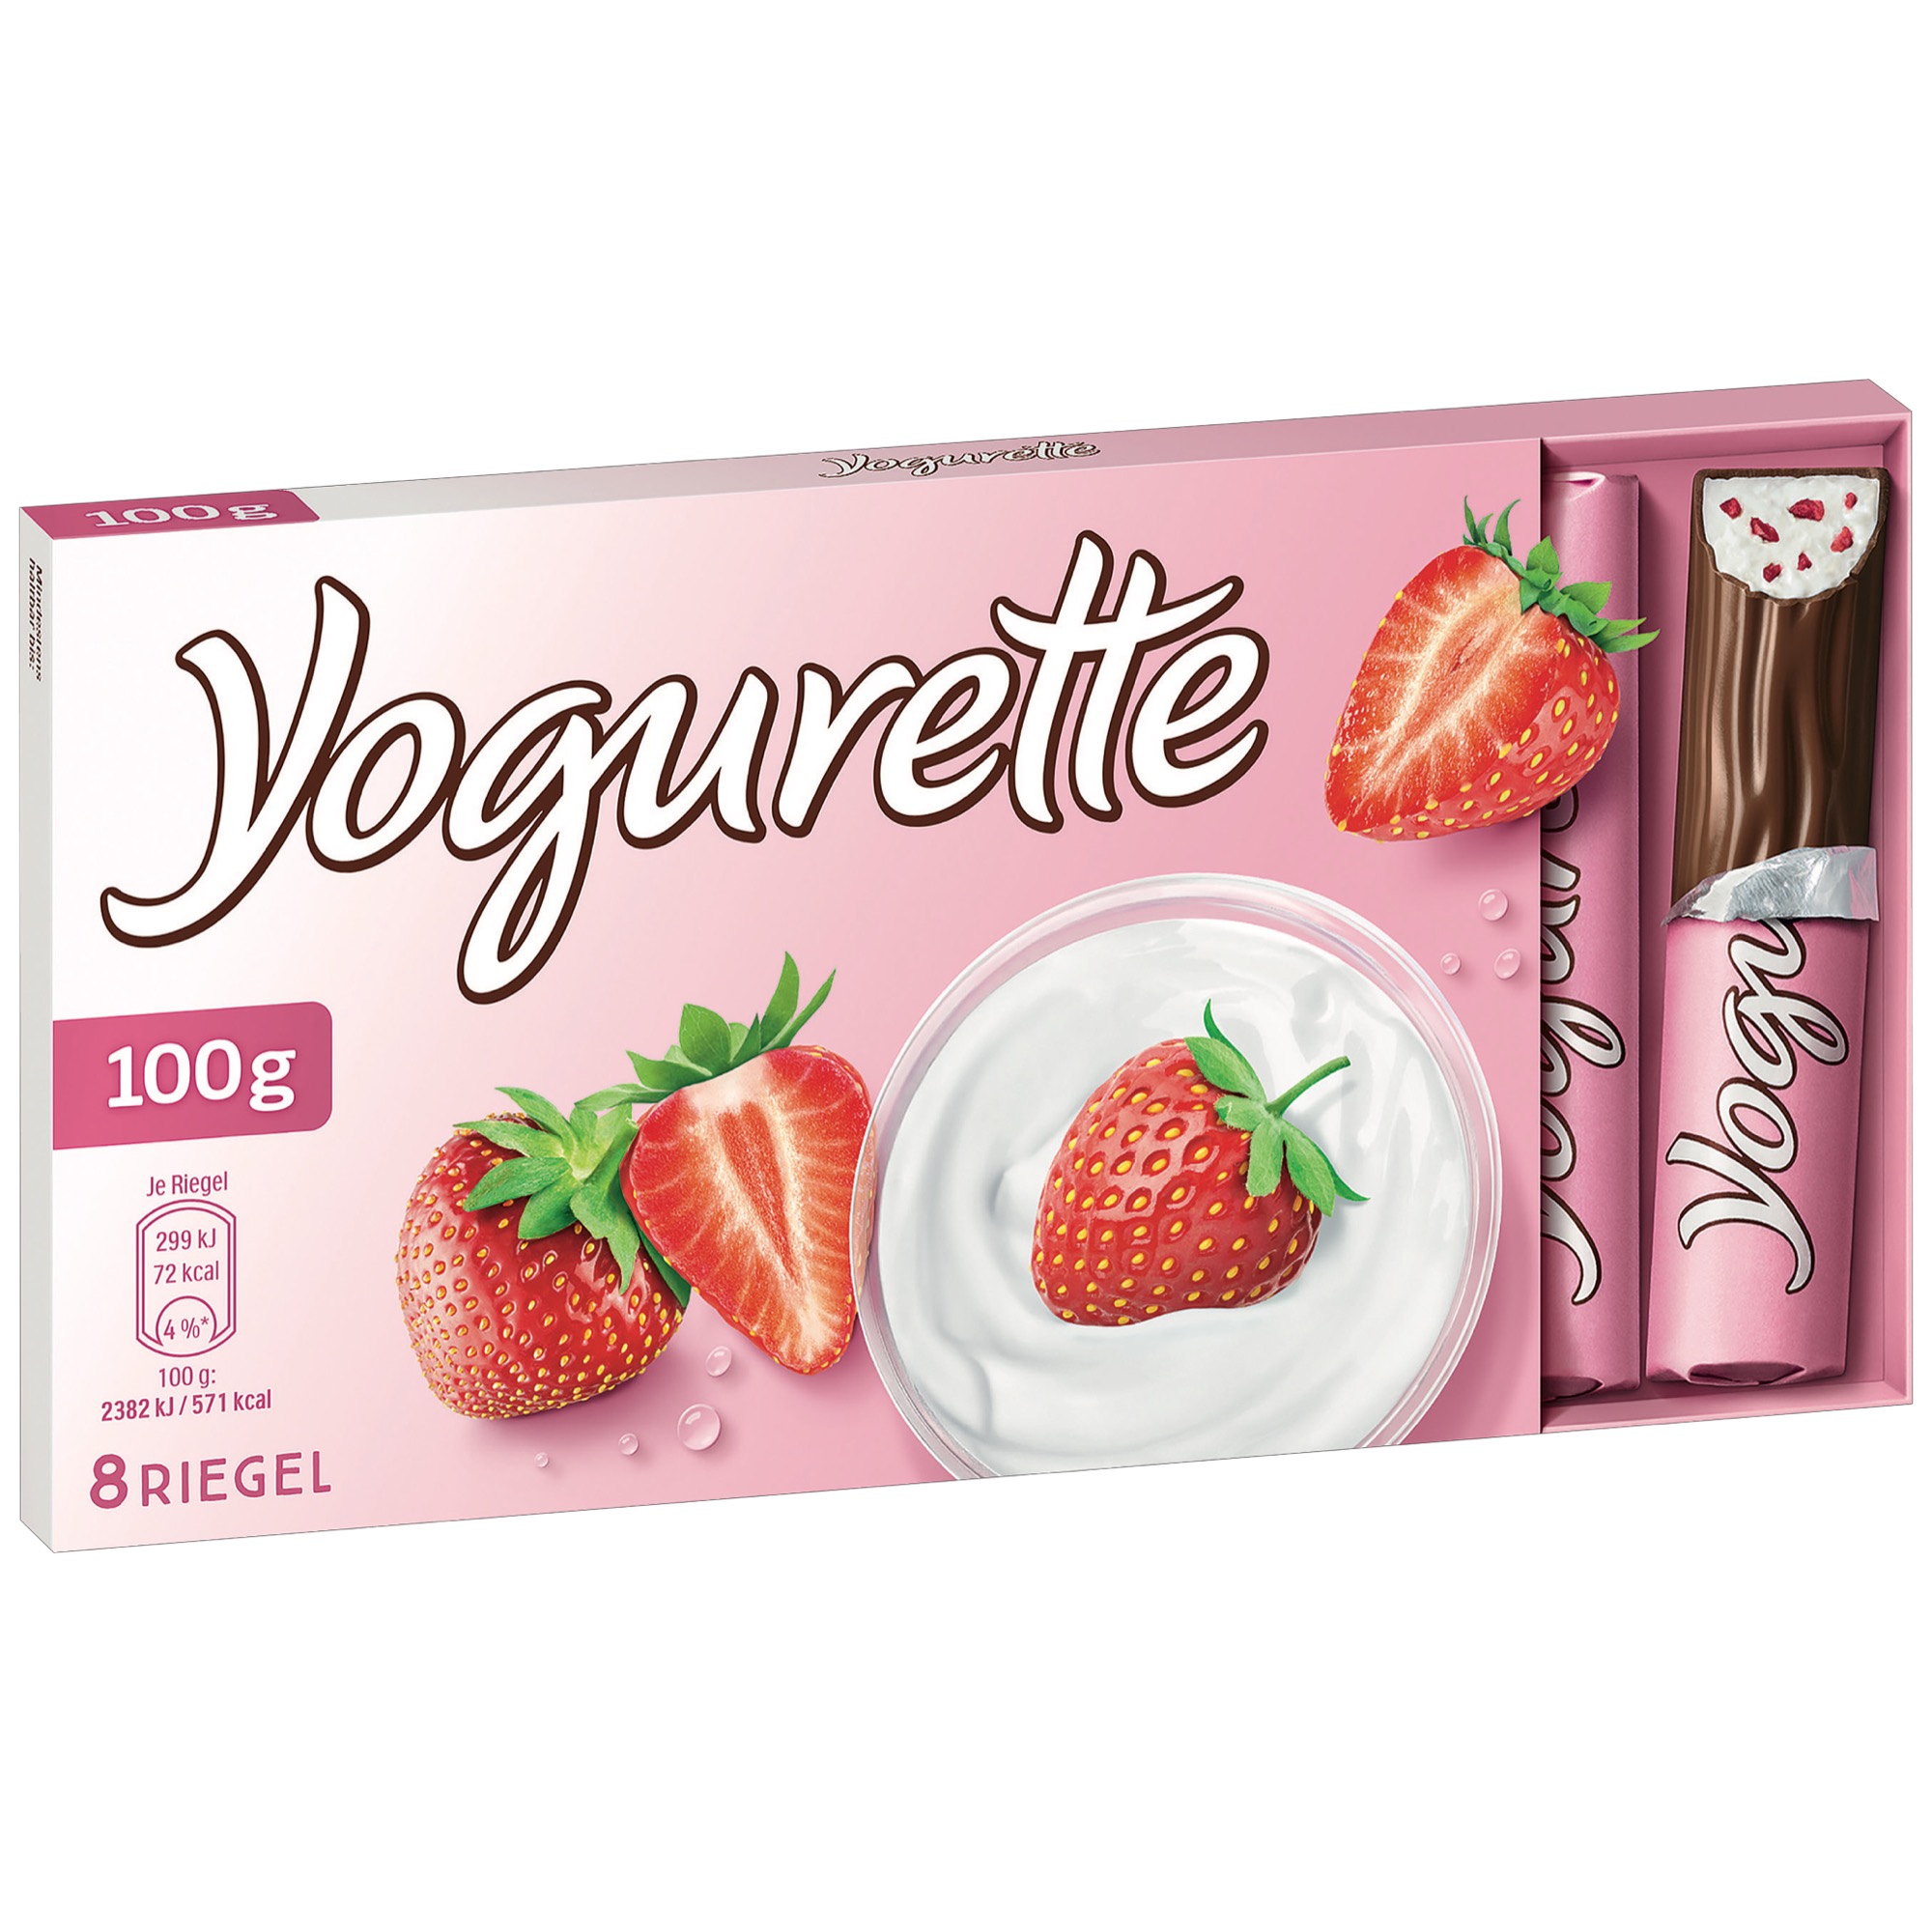 Yogurette 100g